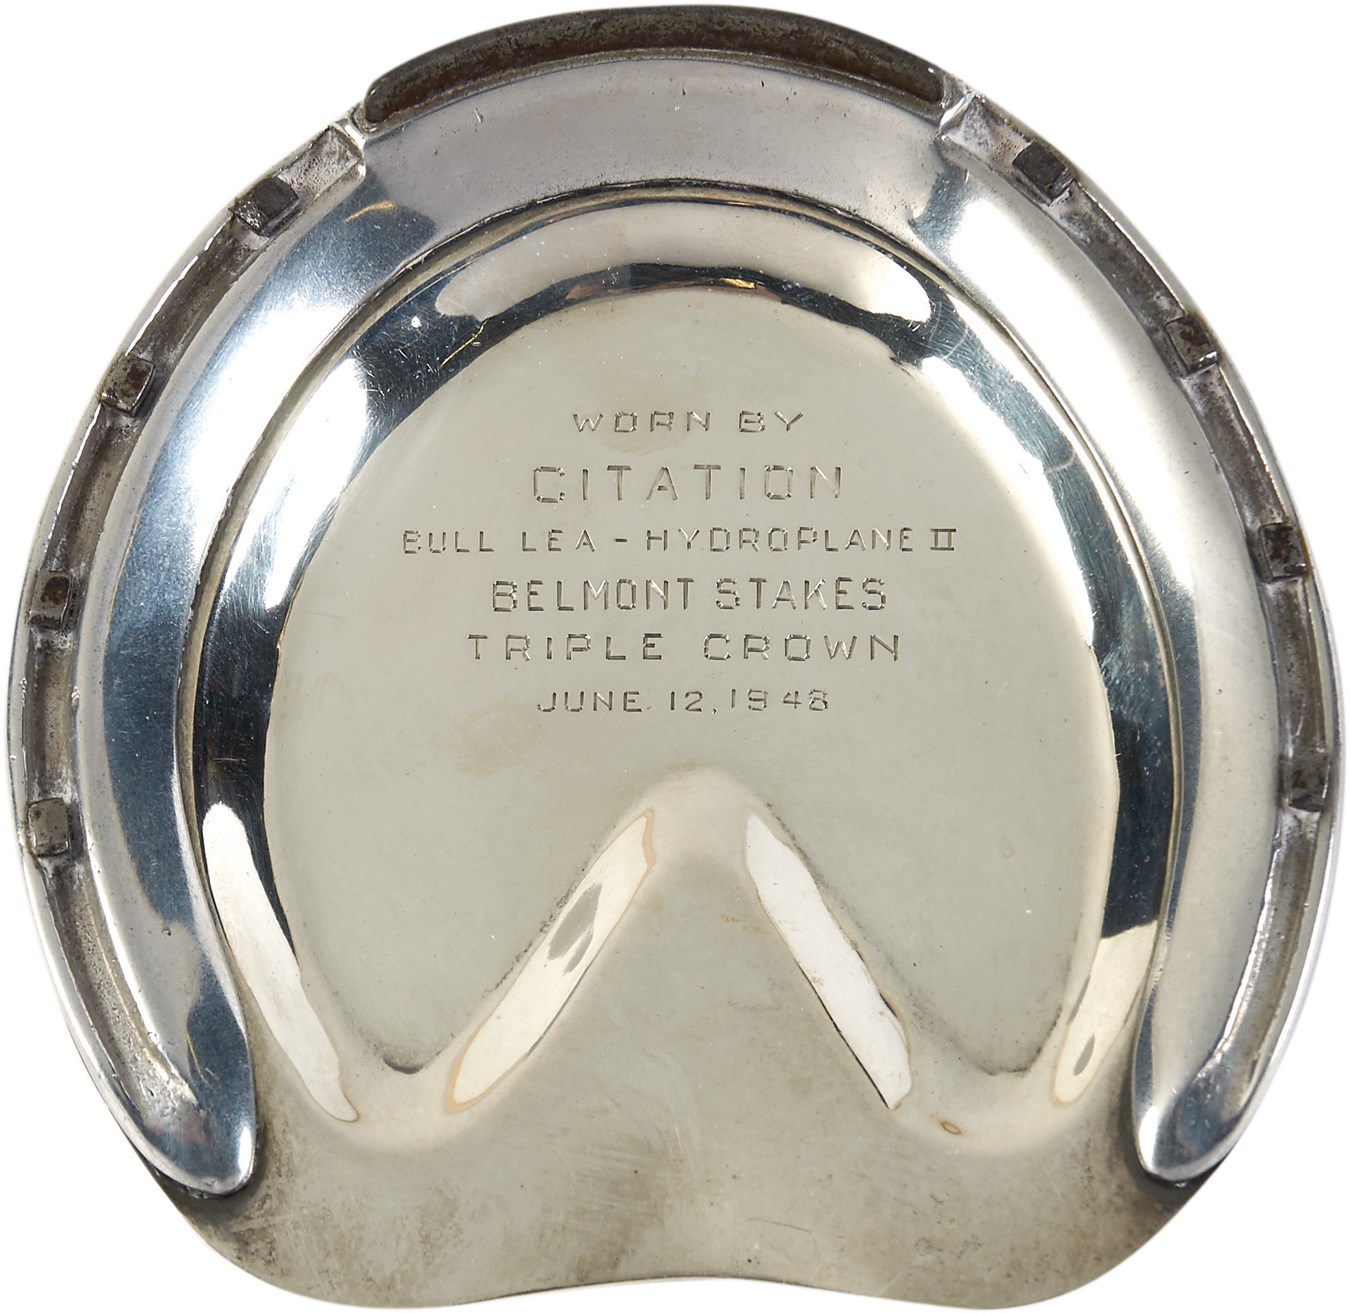 "Citation" 1948 Belmont Stakes Winning Triple Crown Horseshoe